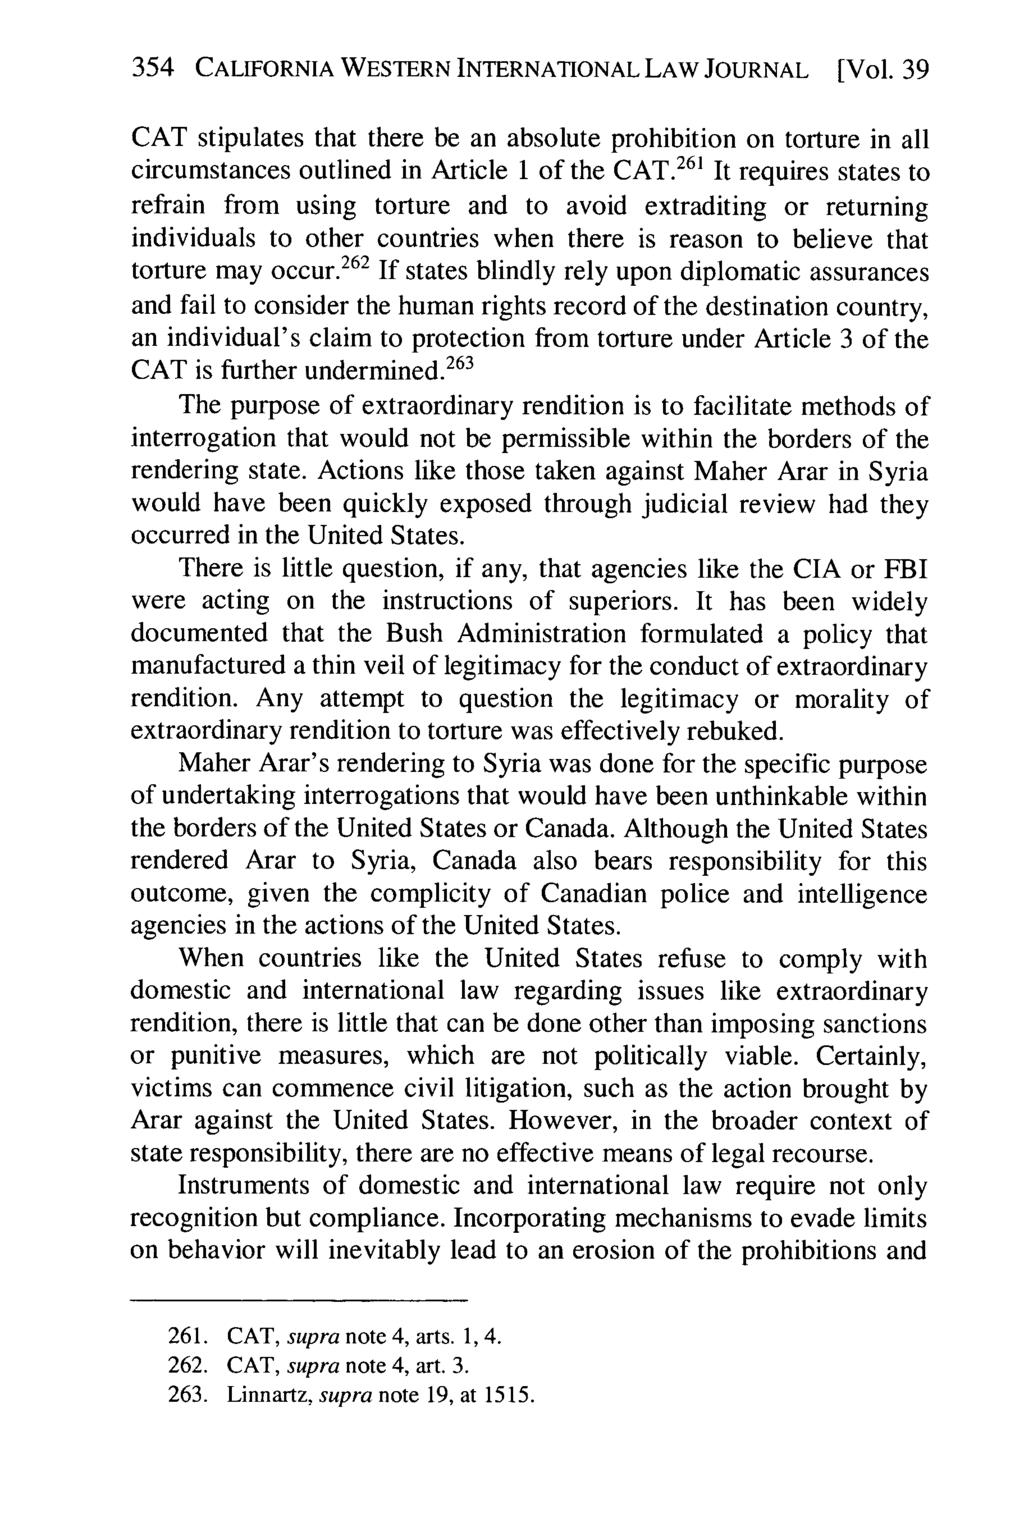 354 California Western International Law Journal, Vol. 39 [2008], No. 2, Art. 4 CALIFORNIA WESTERN INTERNATIONAL LAW JOURNAL [Vol.